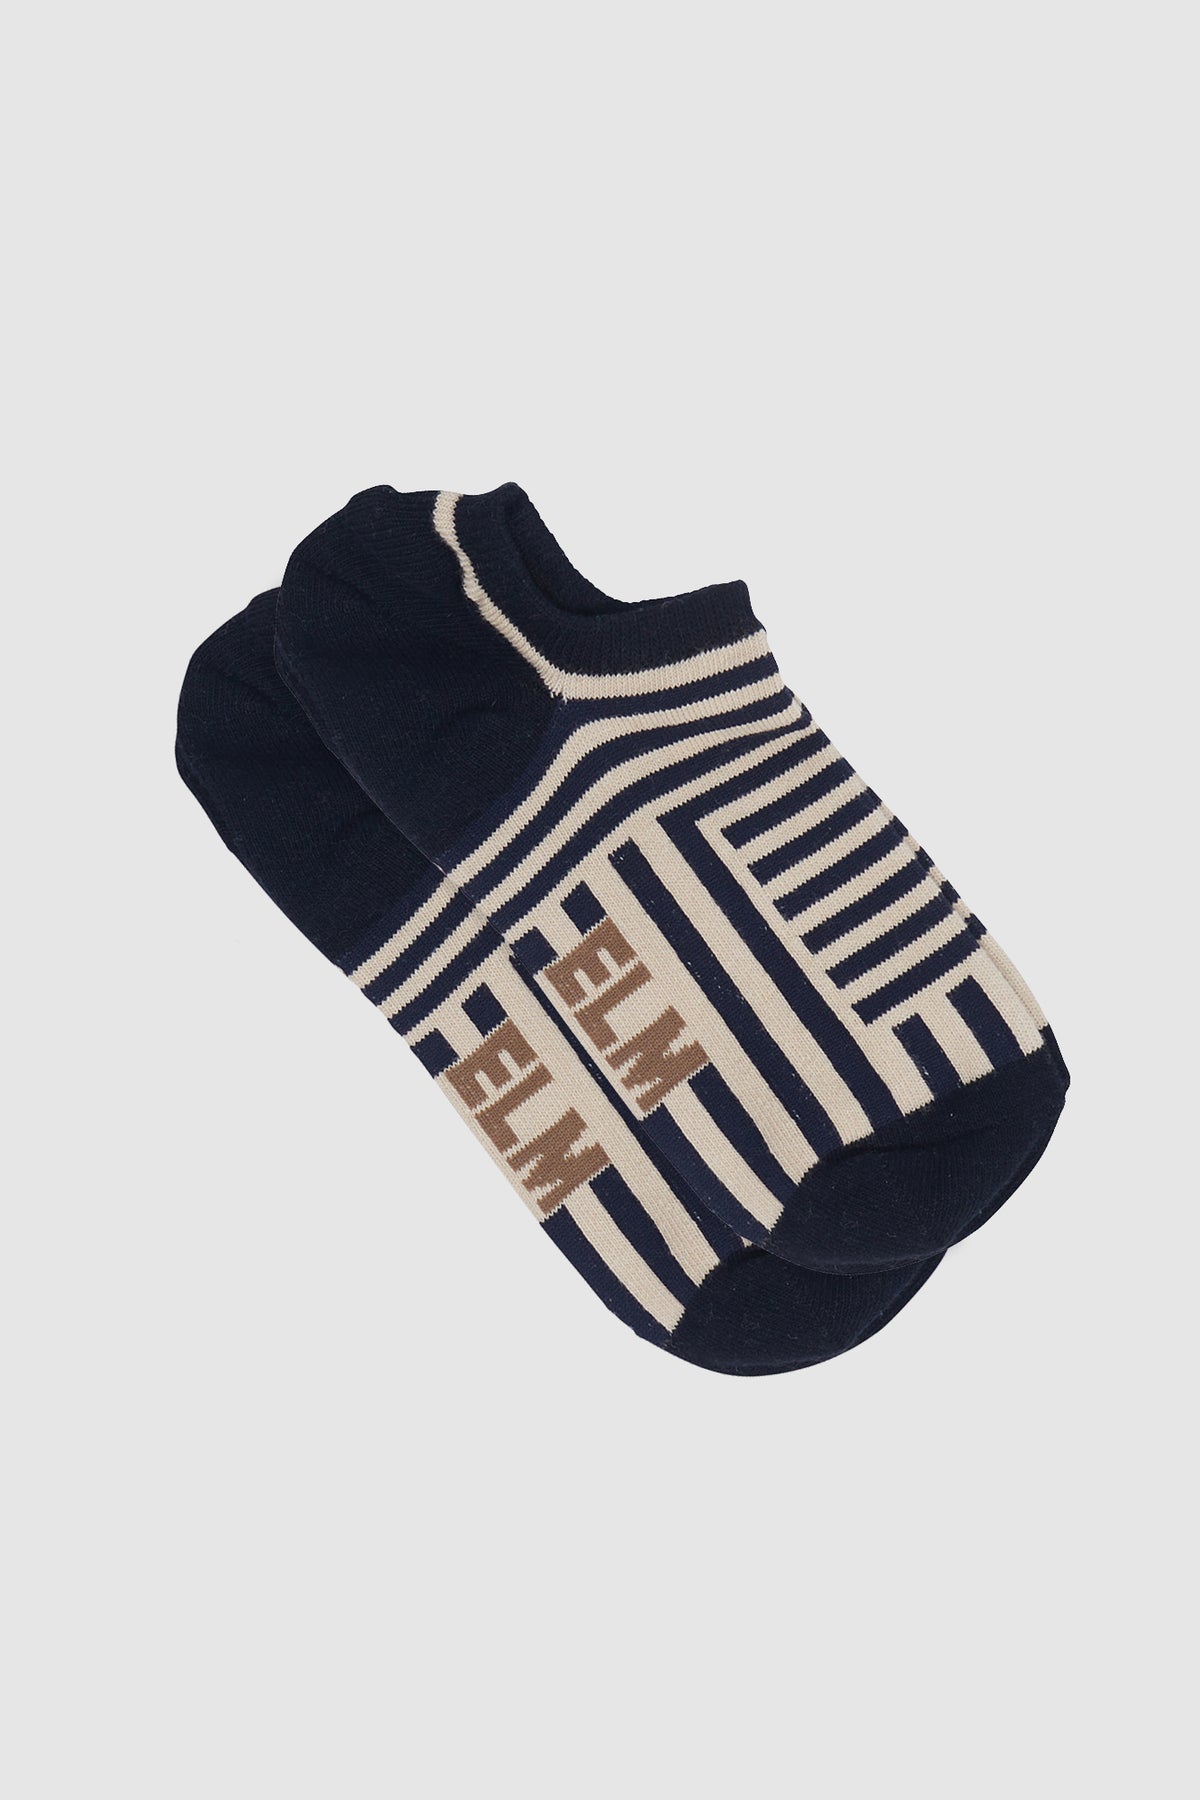 Bauhaus Ankle Sock 2 Pack